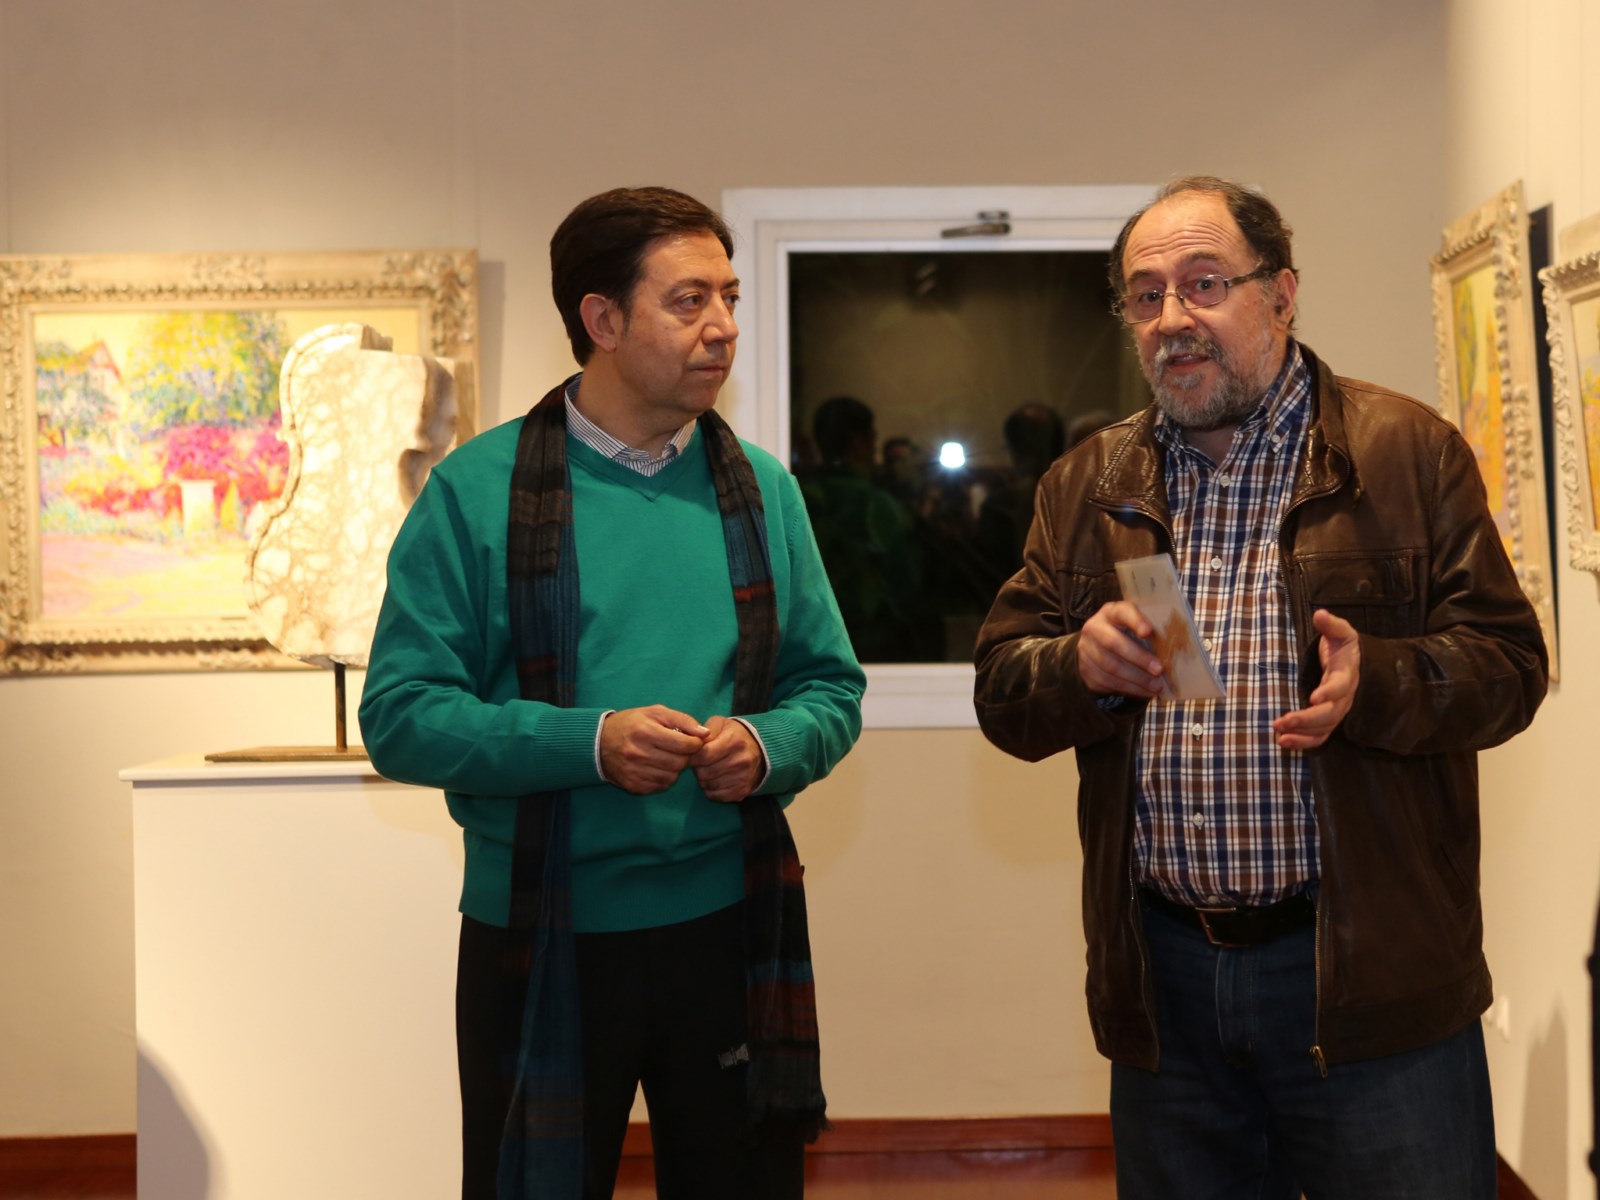 Inauguraci de l'exposici de Mariano Cabellos, "Catleg de mirades"